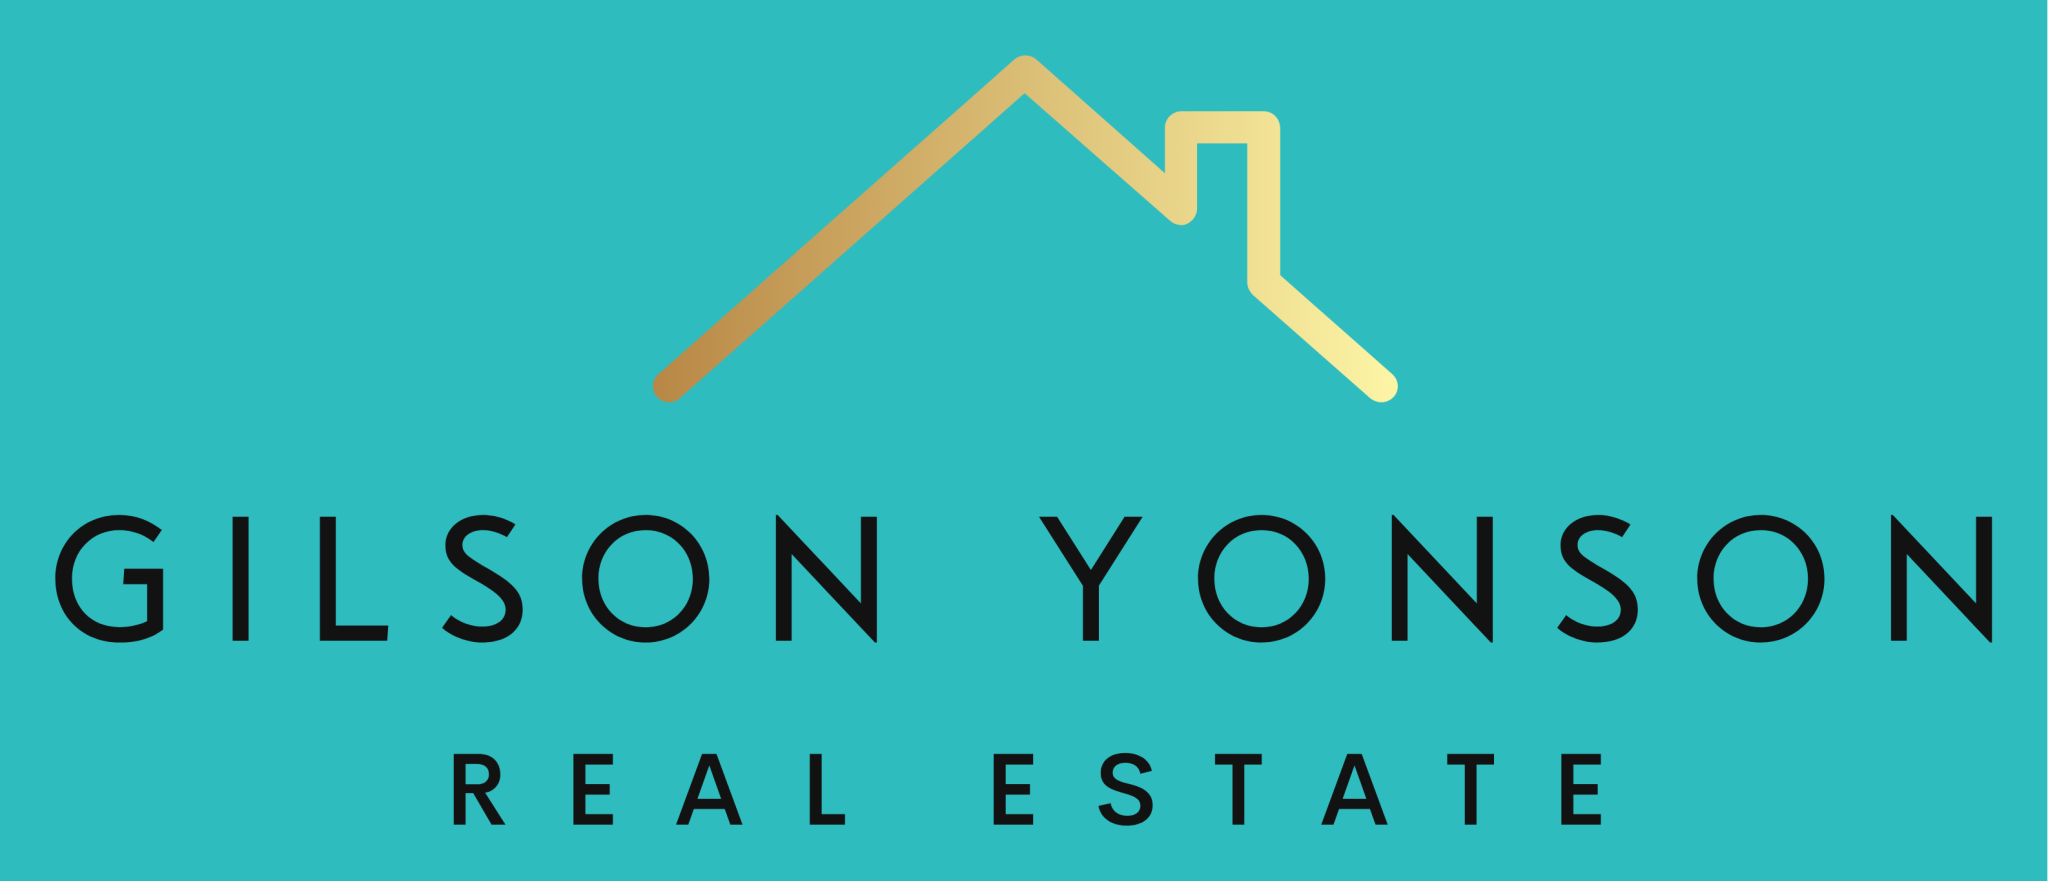 Real Estate Agency Rudy Yonson Real Estate - North Albury